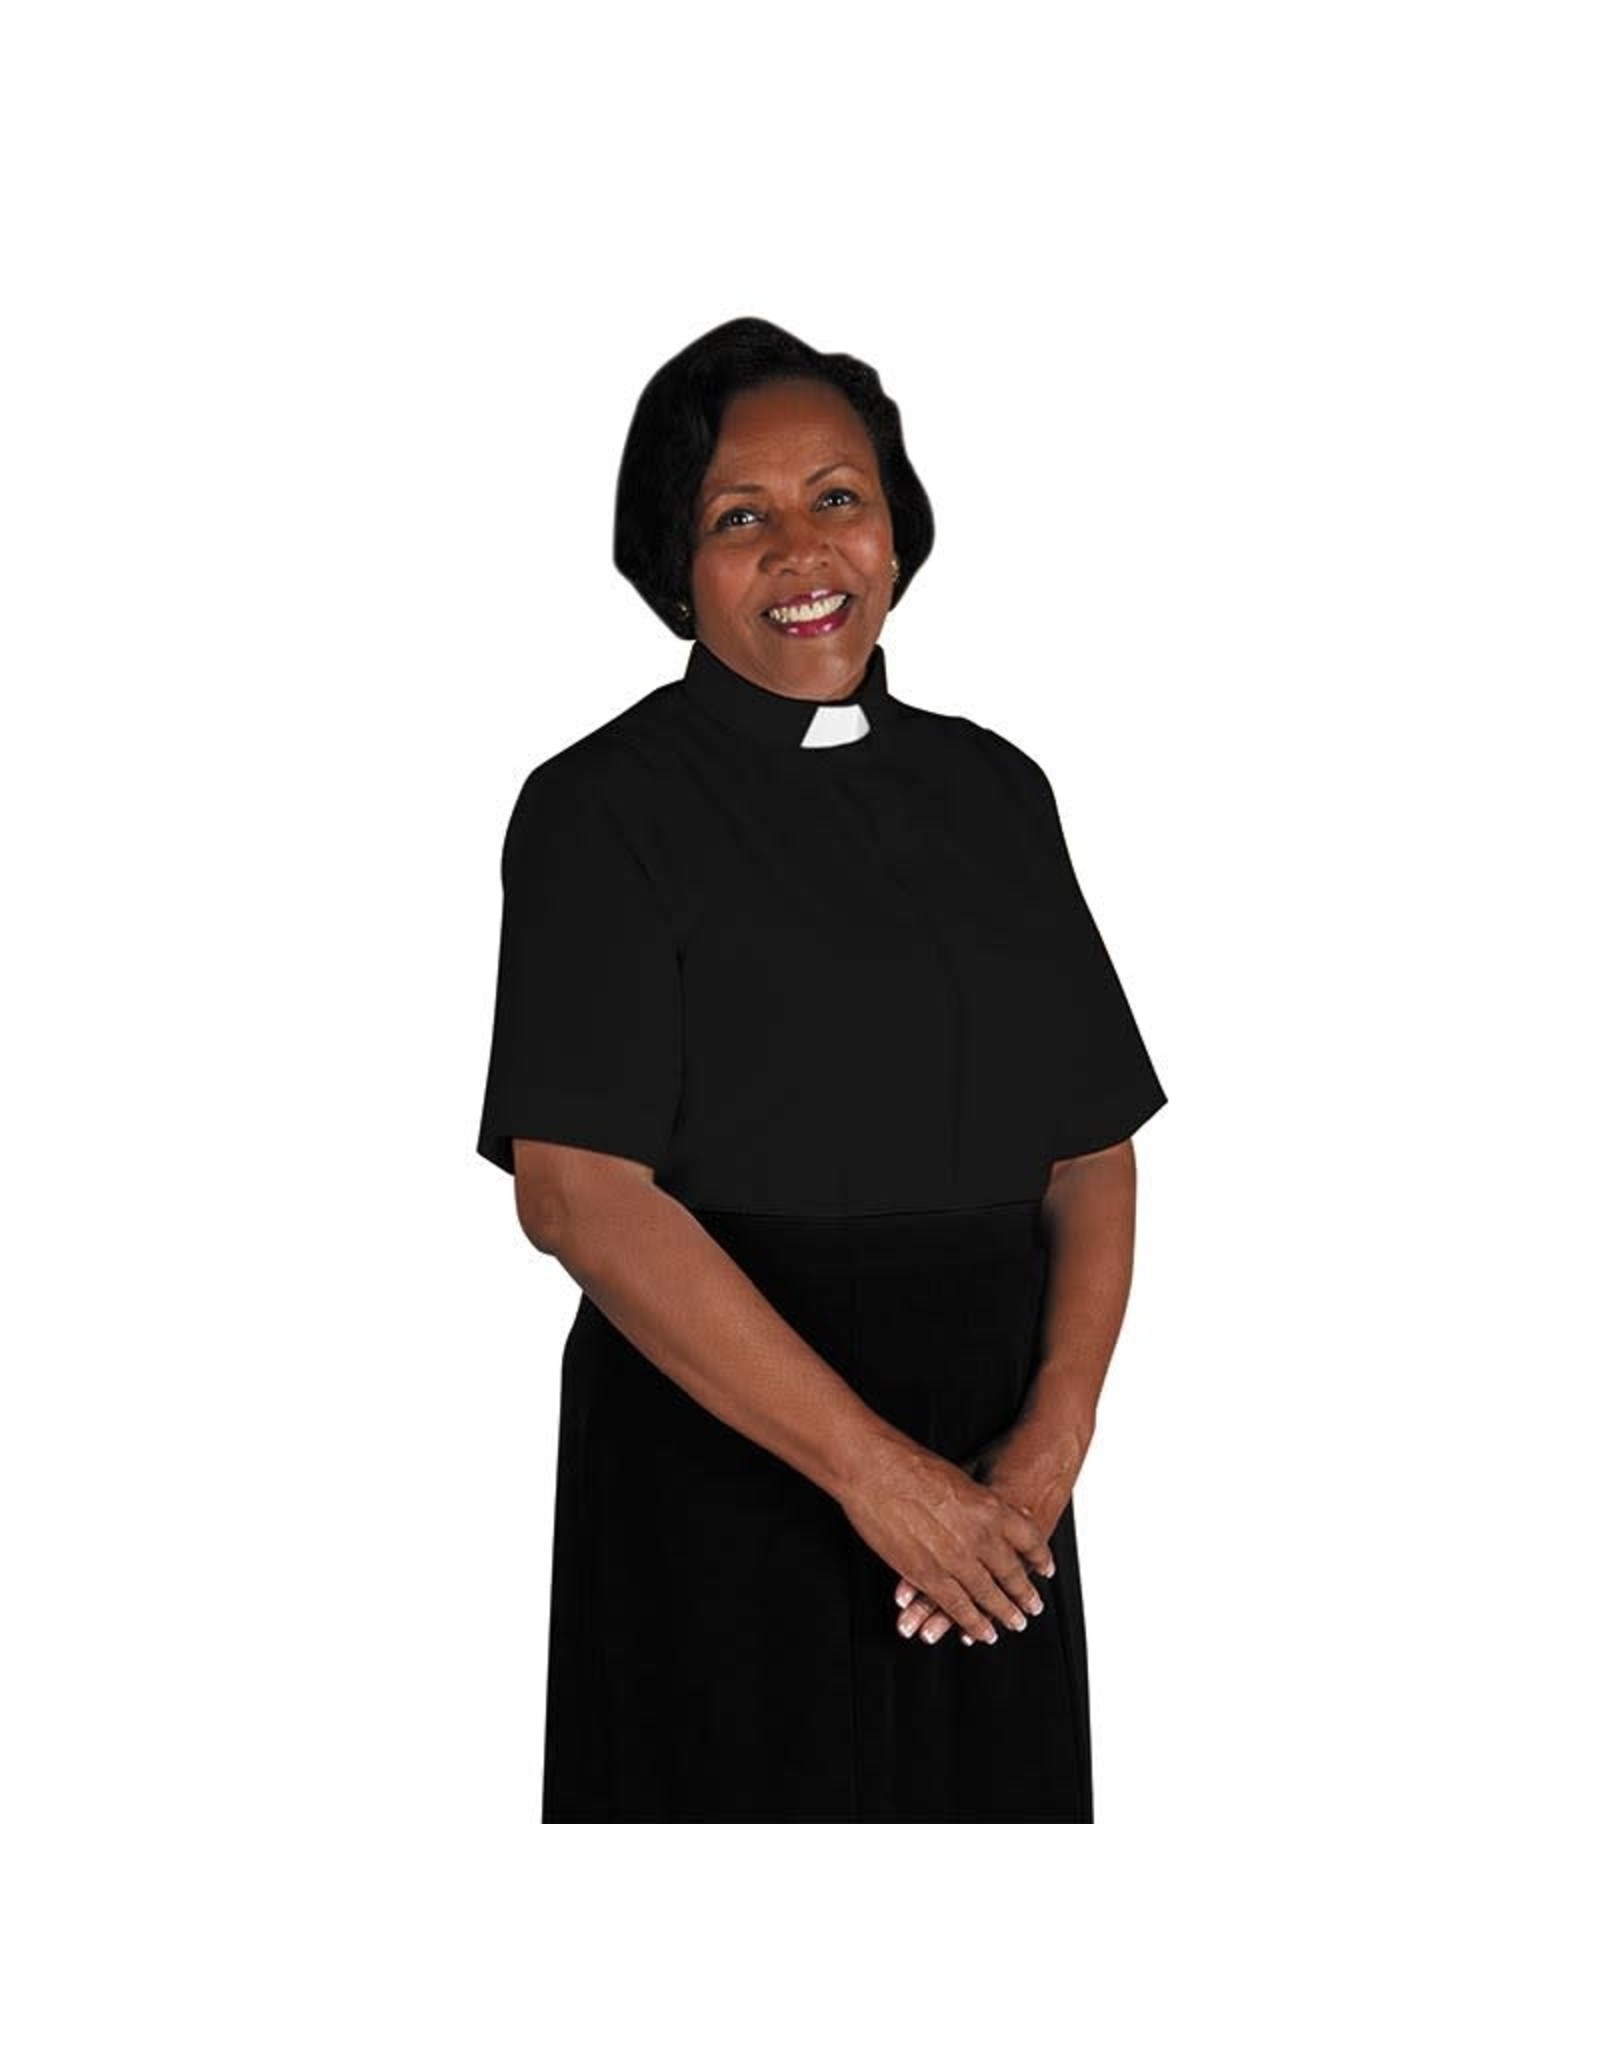 Women's Black Clergy Shirt - Size